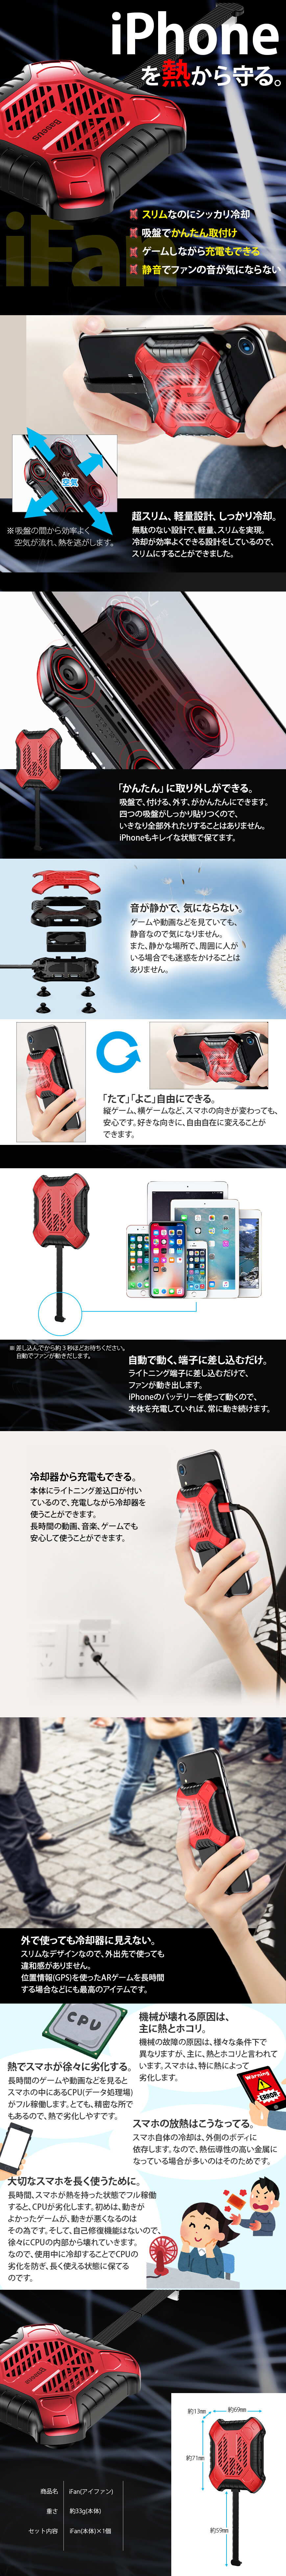 iPhone ゲーム スマホ冷却 冷却器 荒野行動 コンパクト 強力ファン 充電器 吸盤 iFan 送料無料 :IMS-IFAN-A:イルミモールS  - 通販 - Yahoo!ショッピング